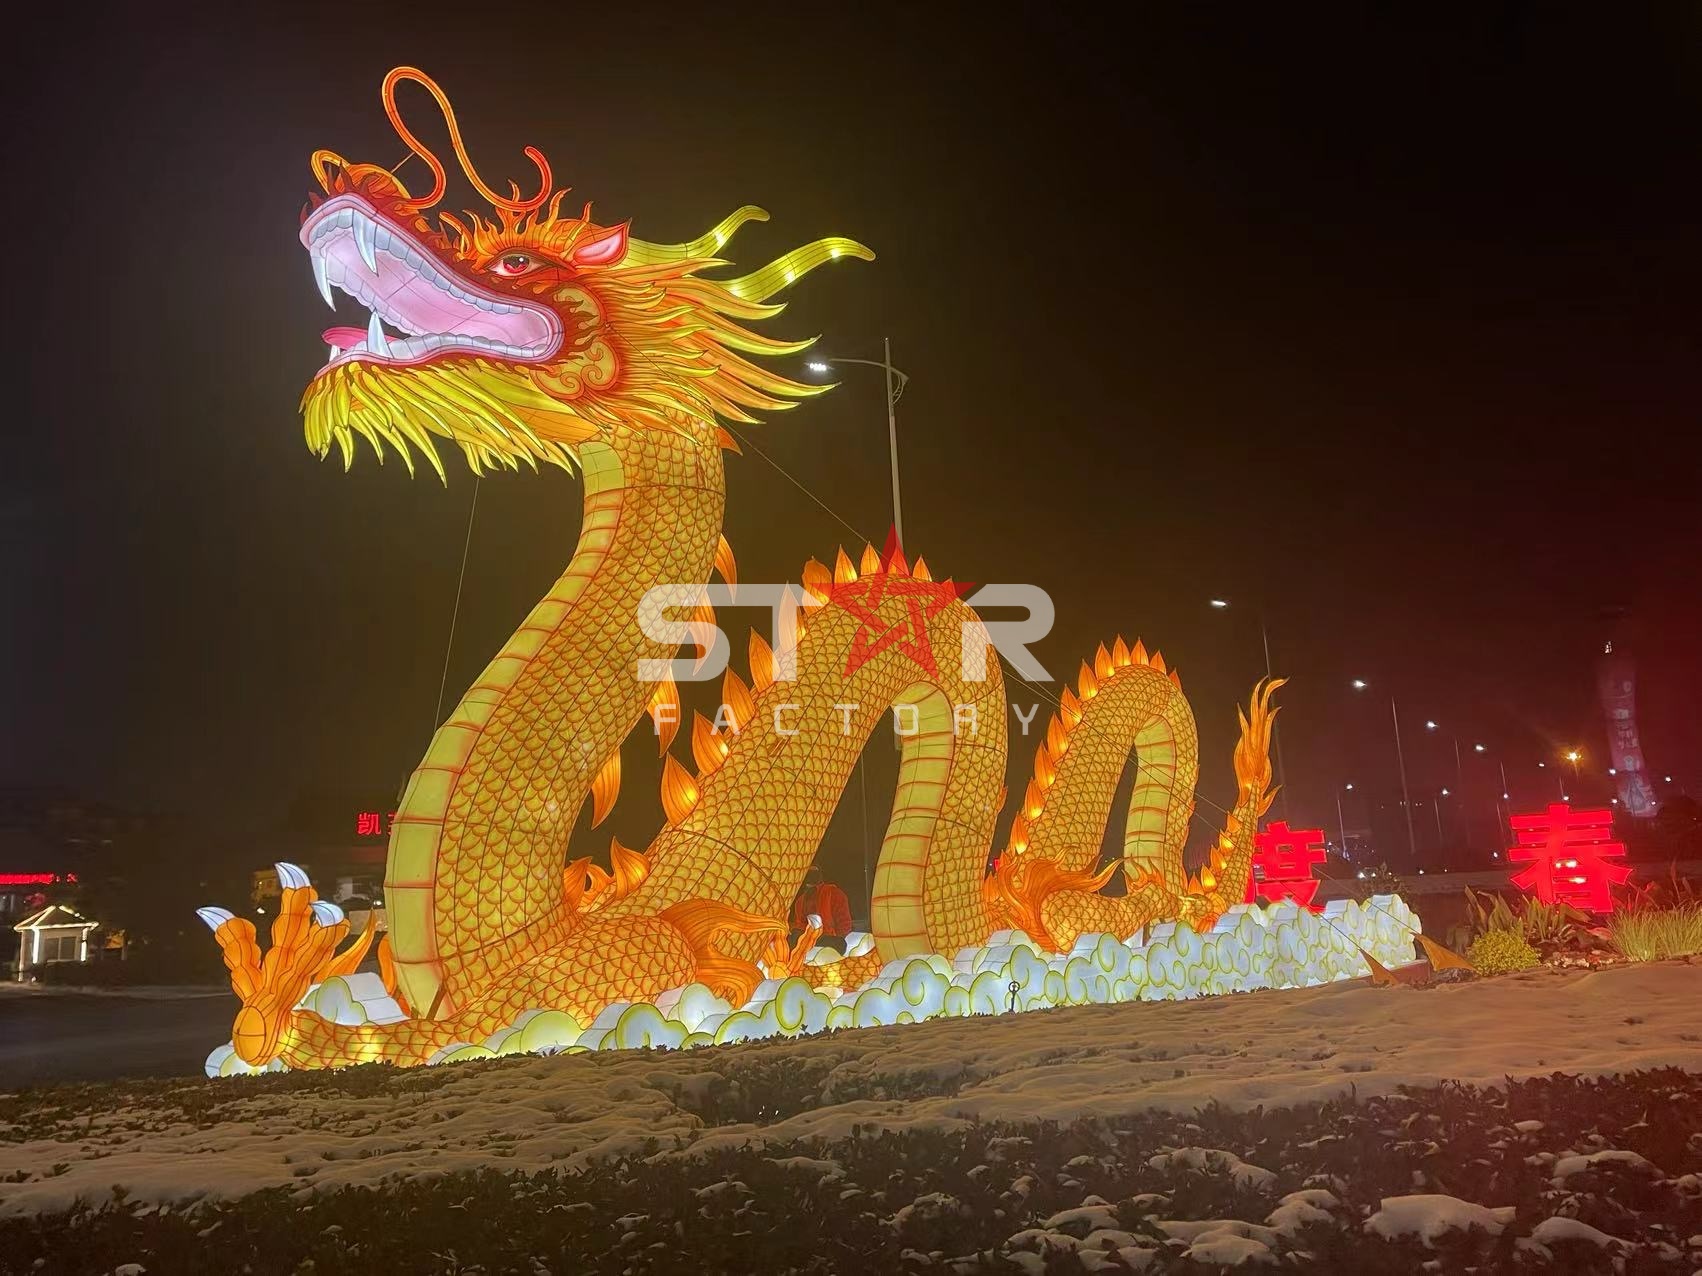 Star Factory Lantern Ltd. Illuminates Zhengzhou Airport with Spectacular Dragon Lantern